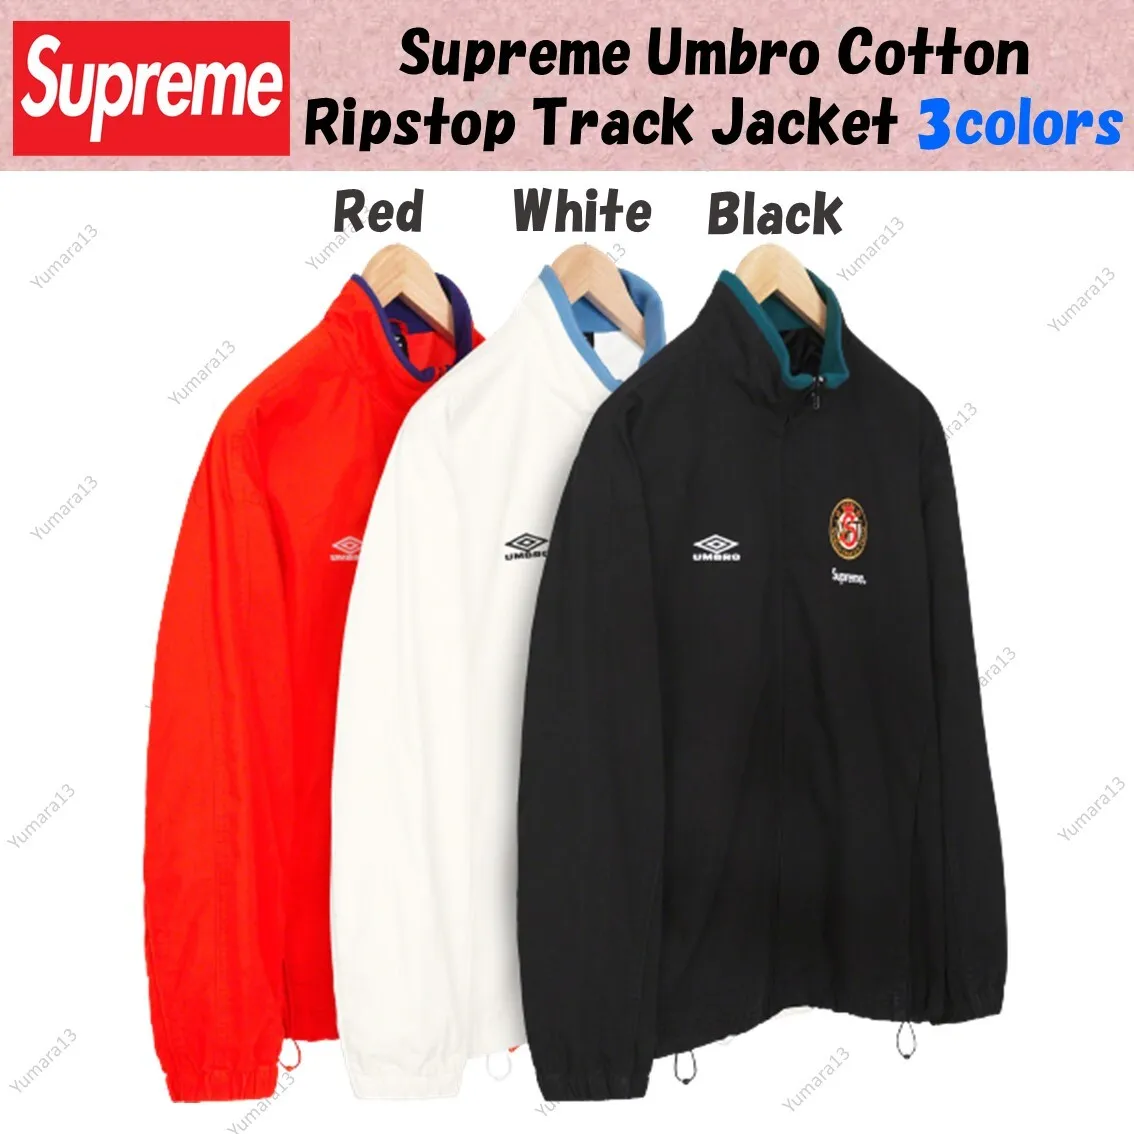 Supreme Umbro Cotton Ripstop Jacket